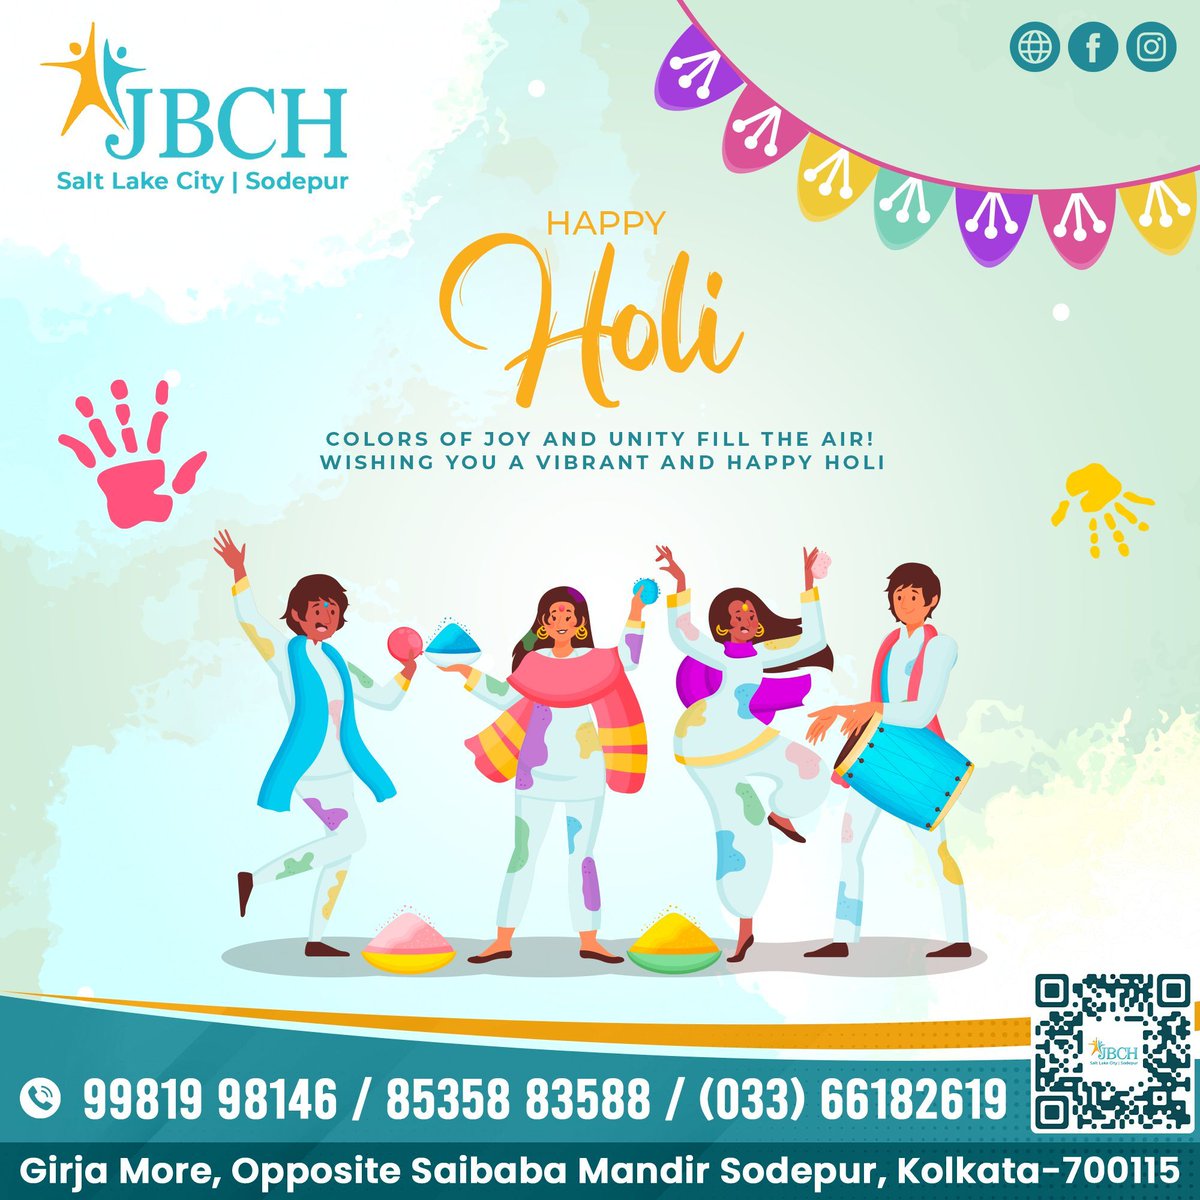 Sending colorful vibes and warm wishes your way this Holi! Enjoy to the fullest!
Happy Holi! 
.
.
#HoliFestival #ColorfulCelebration #HoliVibes #FestivalOfColors #ColorSplash #ColorfulLife #JointCare #CareToCare #JBCHHospital #KolkataHospital